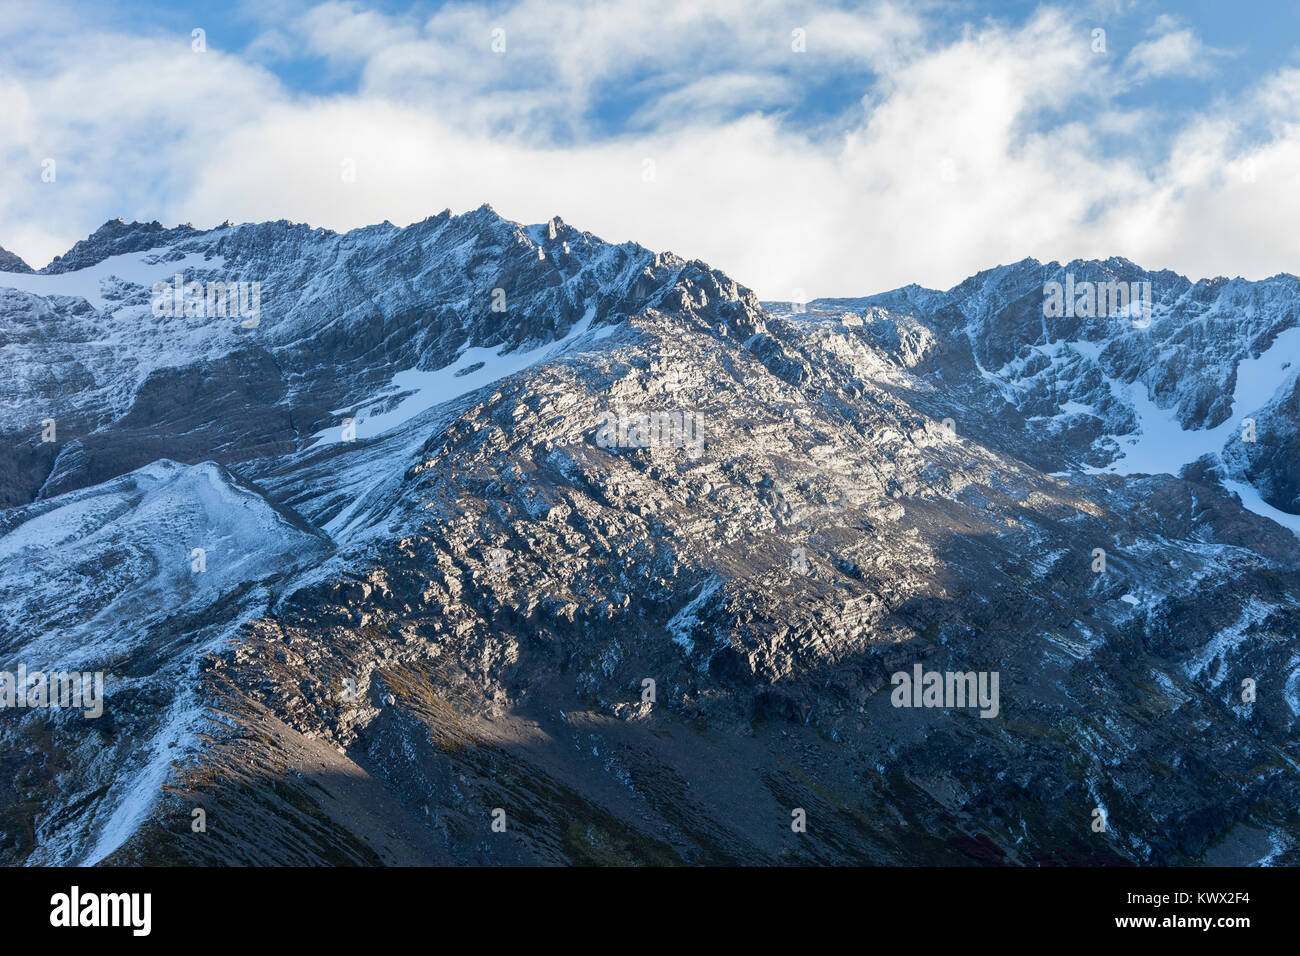 Martial Glacier mountains near the Ushuaia. Ushuaia is the main city of Tierra del Fuego in Argentina. Stock Photo